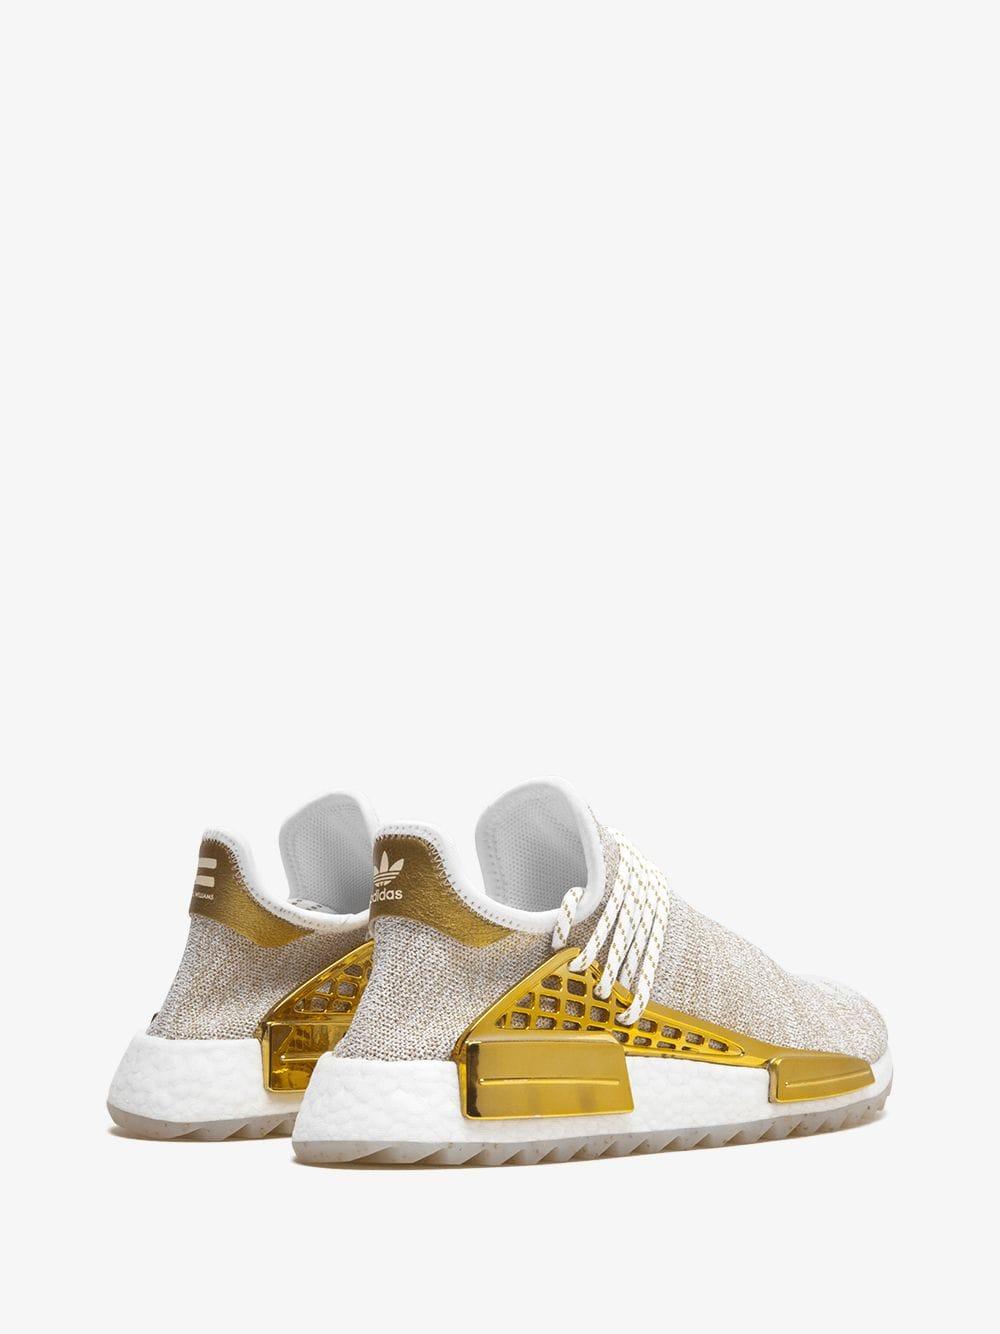 adidas pharrell white and gold